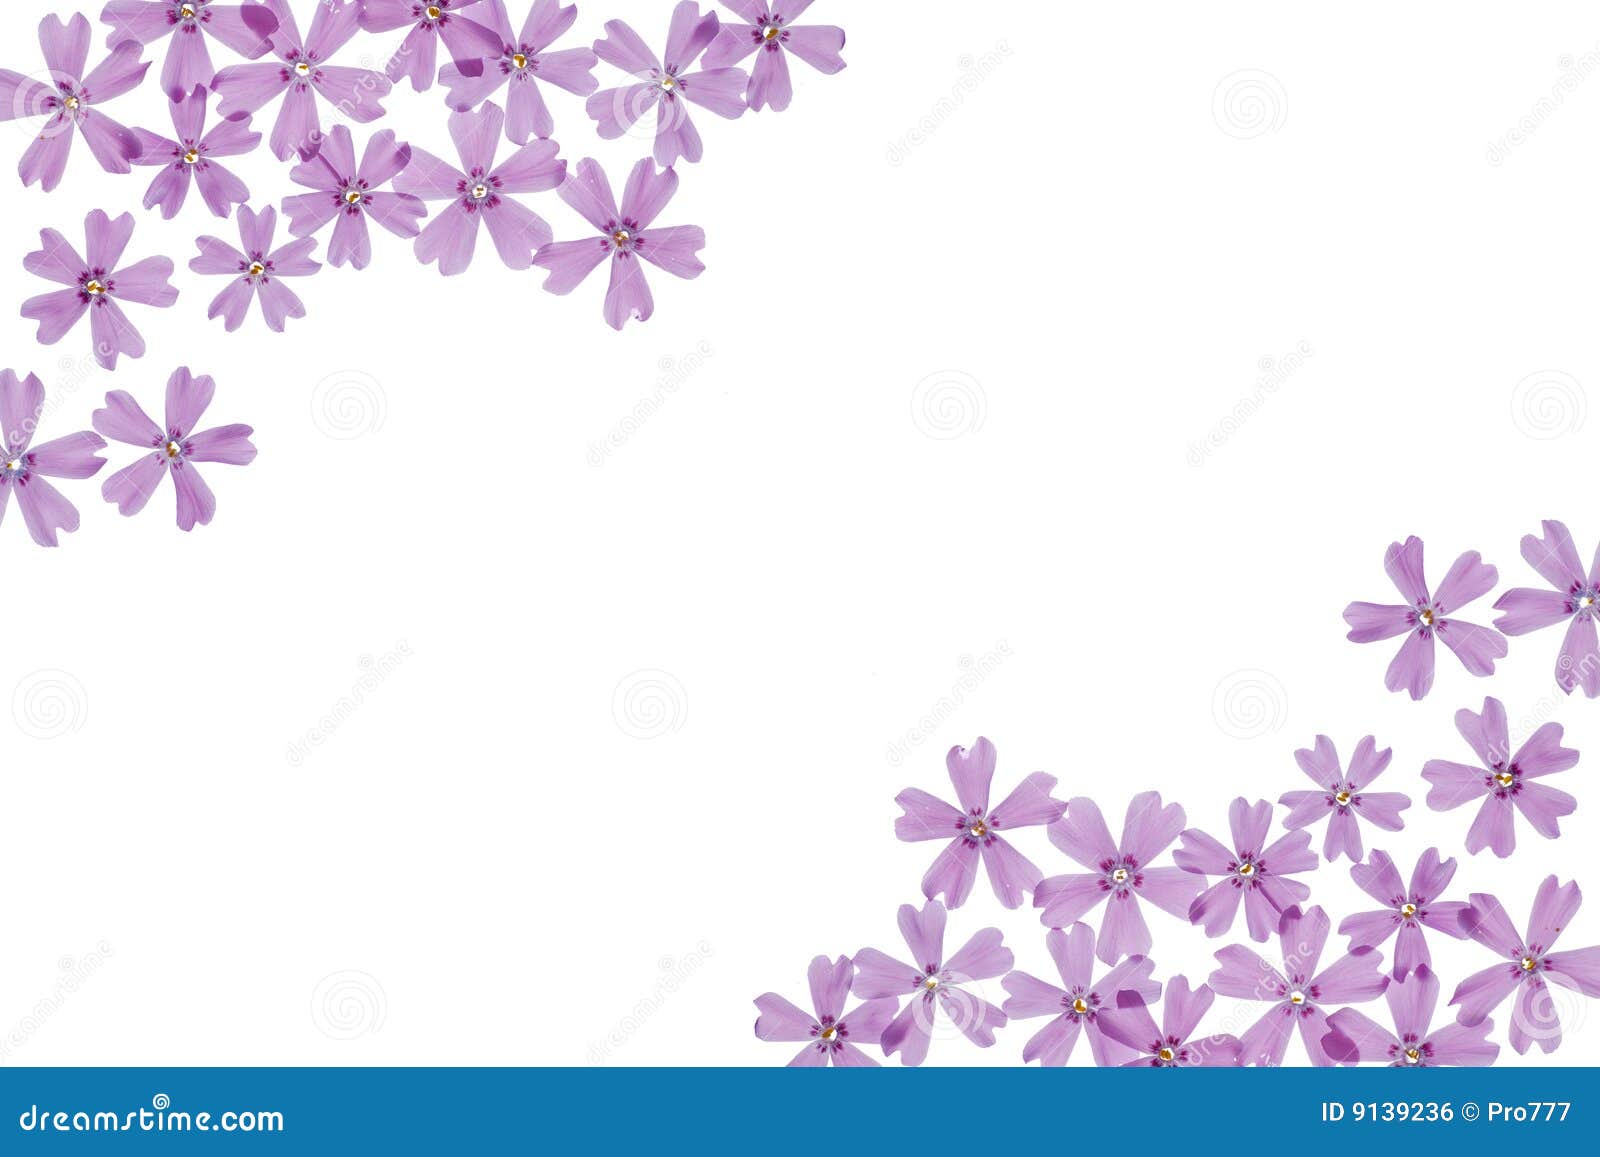 Flowers on White Background Stock Photo - Image of beautiful, lilac